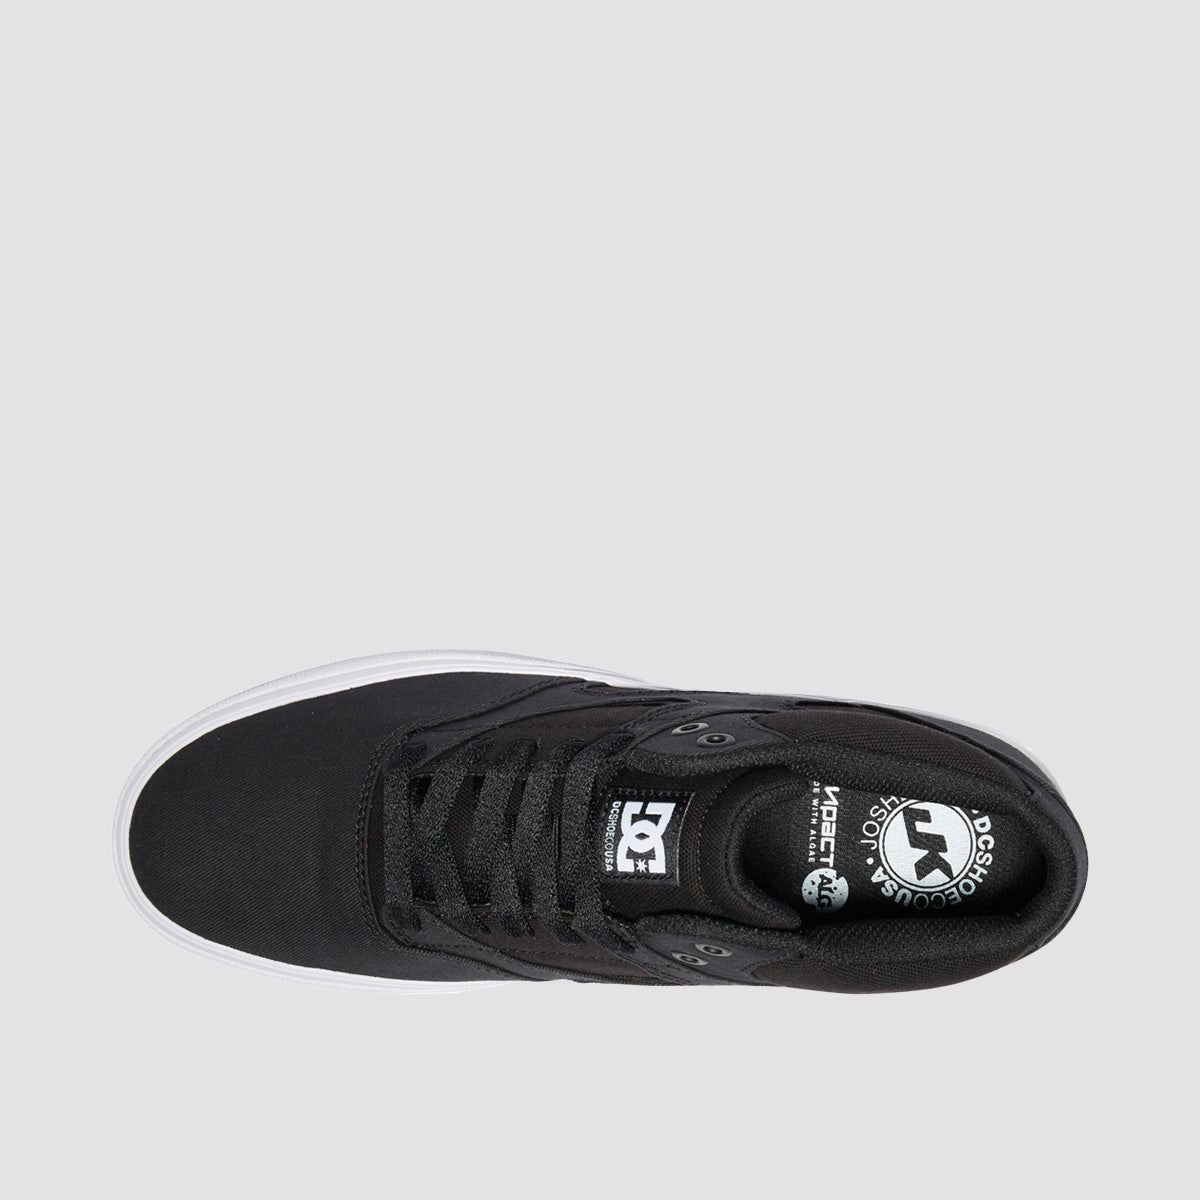 DC Kalis Vulc Mid Shoes - Black/Black/White